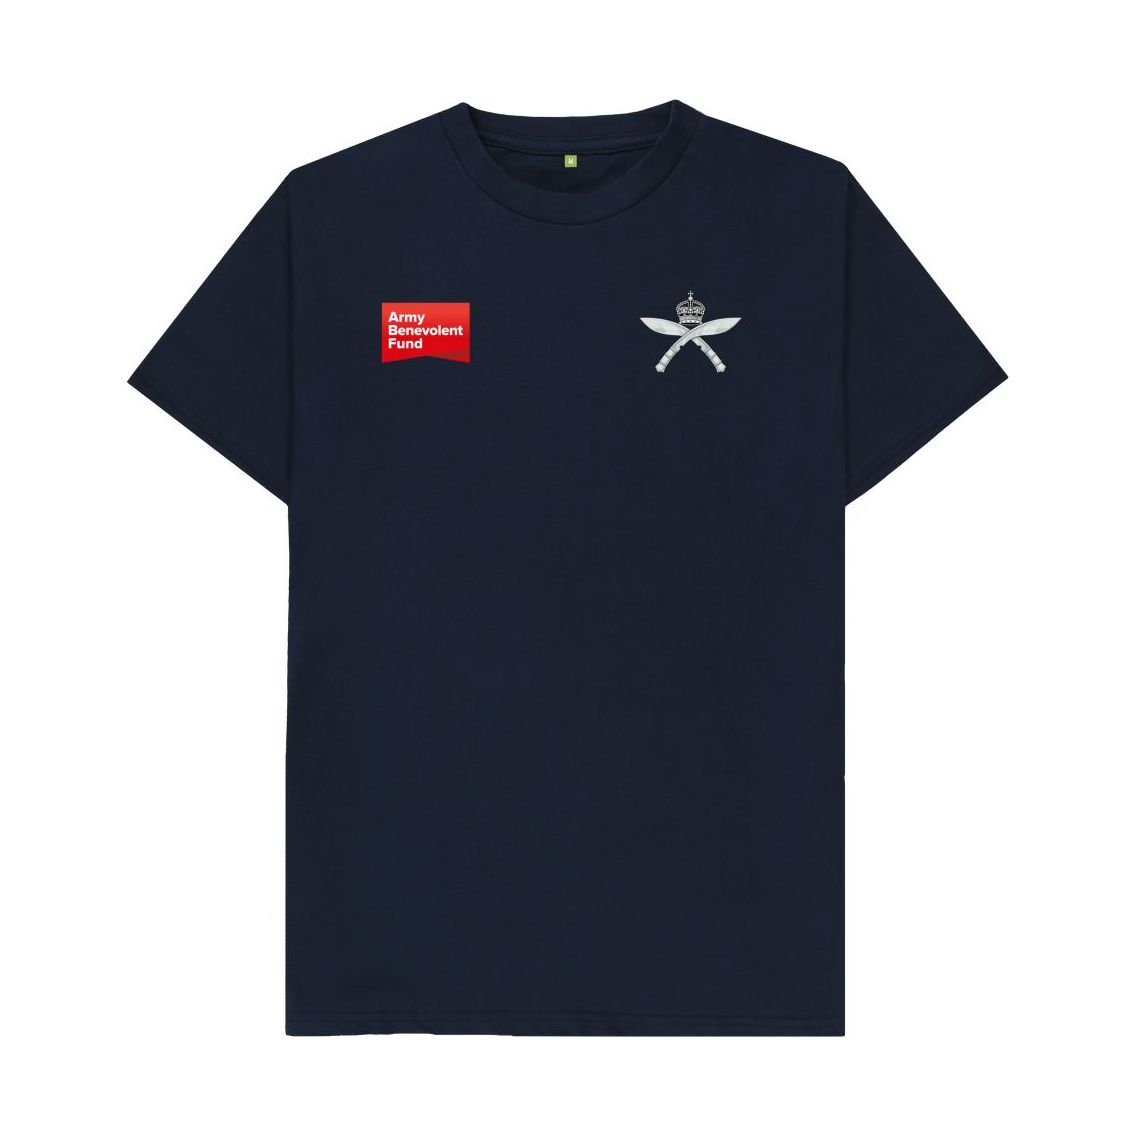 Royal Gurkha Rifles Unisex T-shirt - Army Benevolent Fund